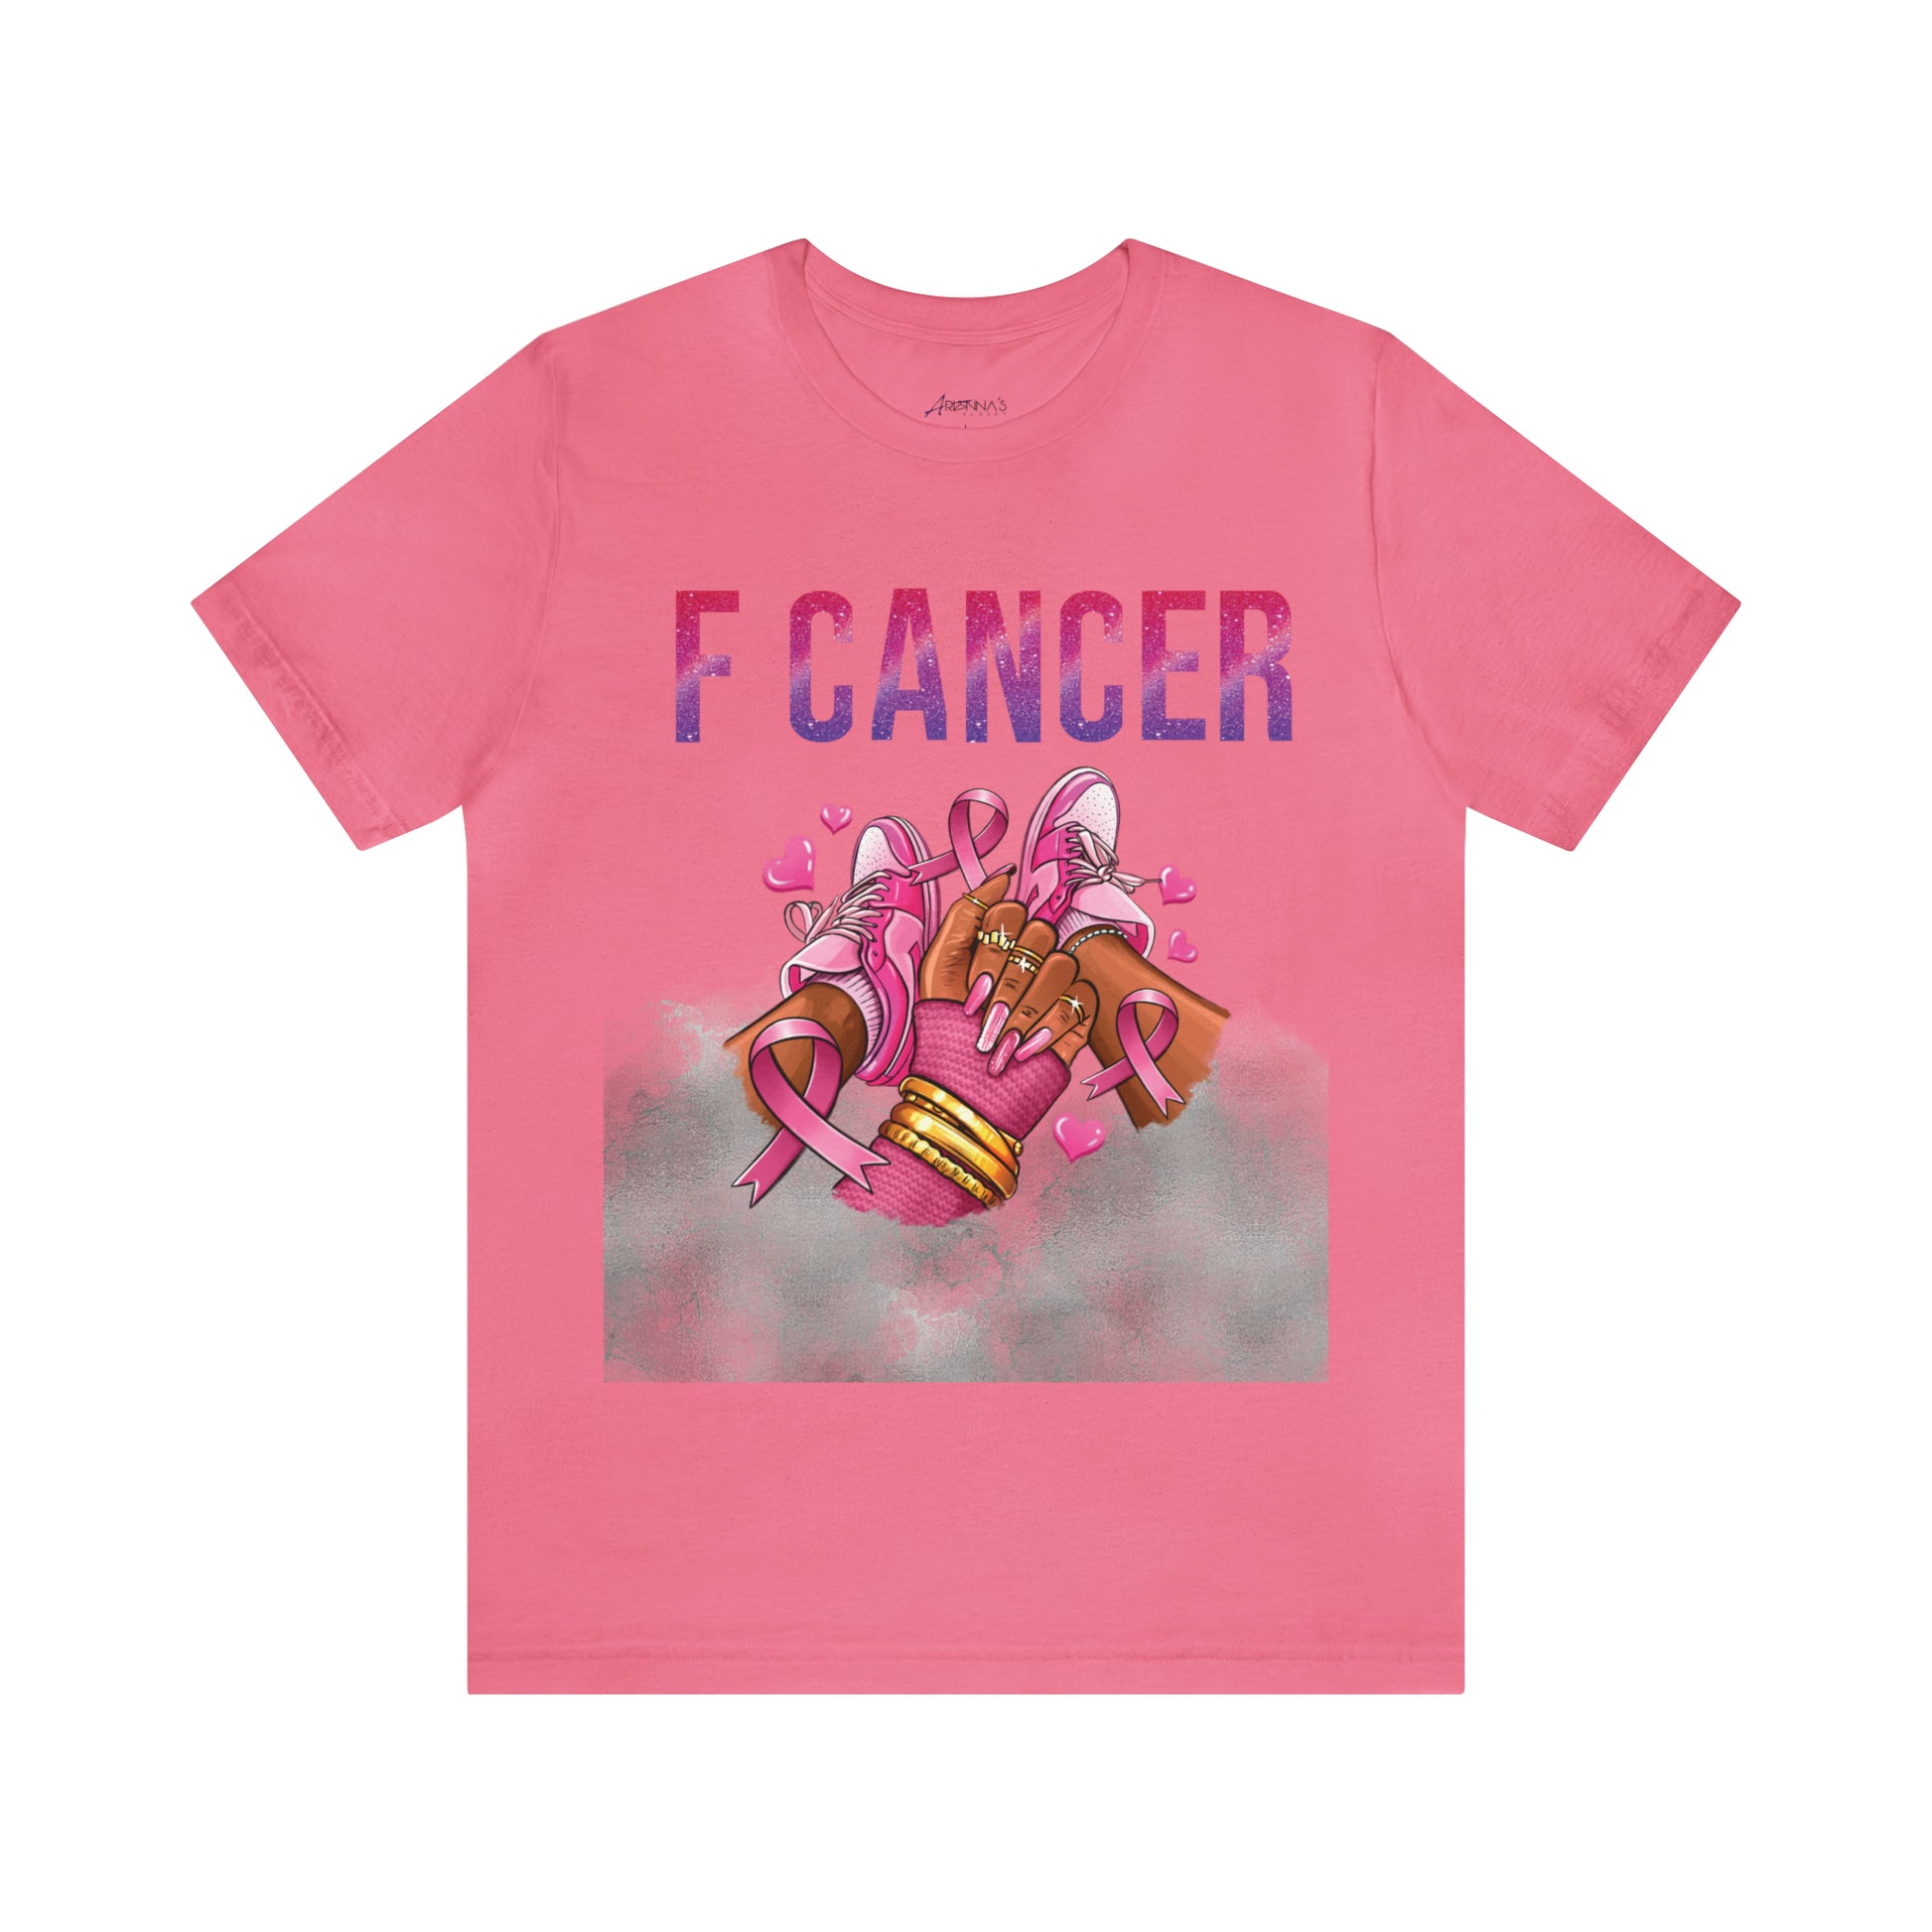 F Cancer Jersey Short Sleeve Tee - Arianna's Kloset